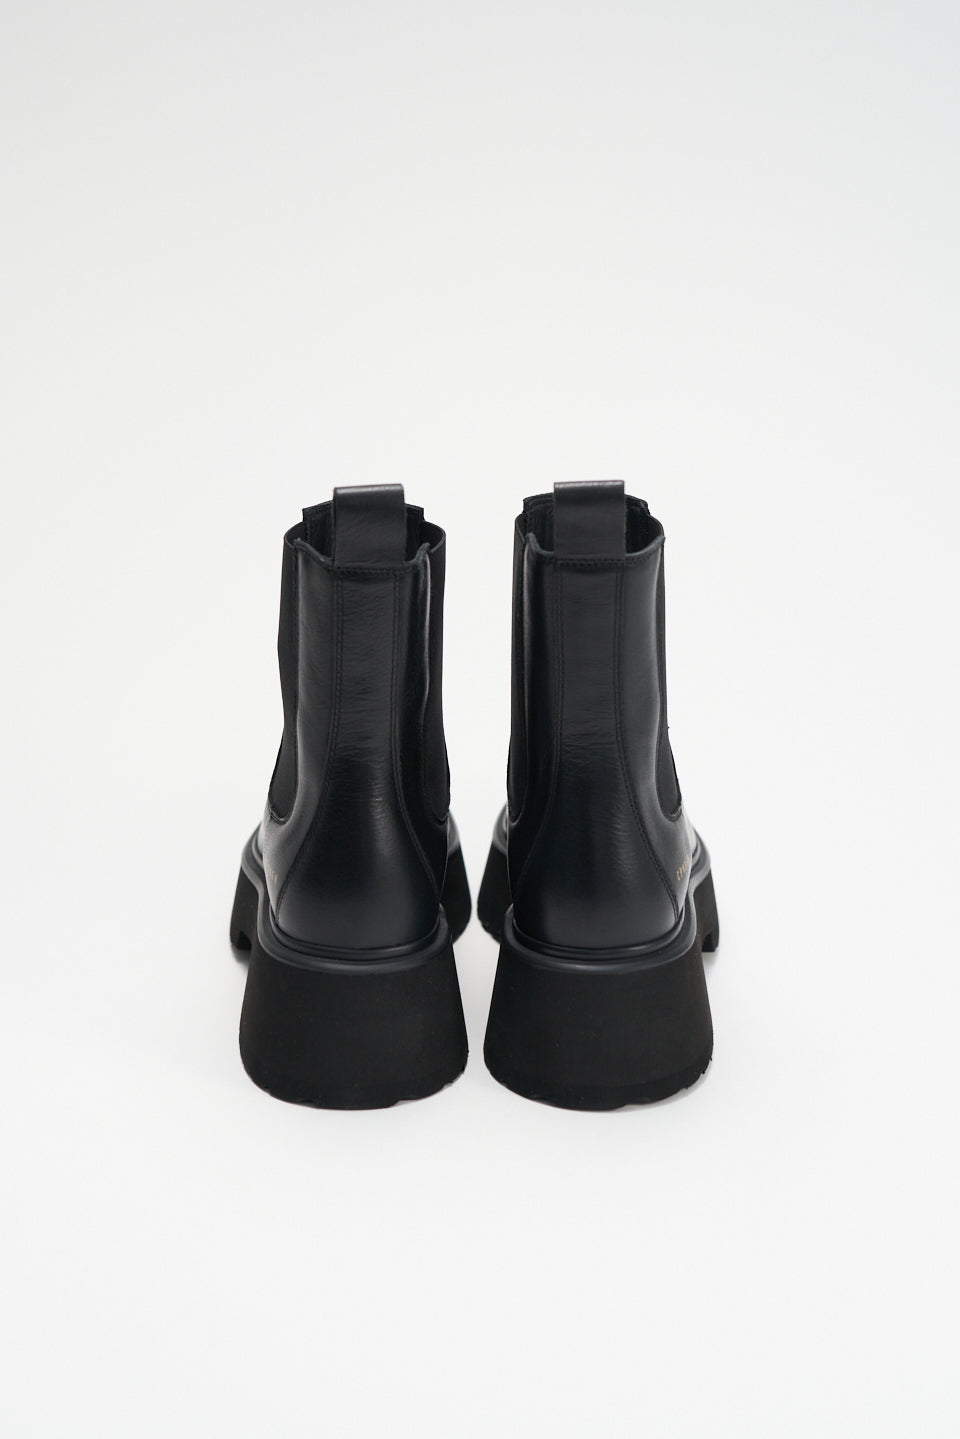 Vitello Black Low Chelsea Boots CPH683_BLACK - 5